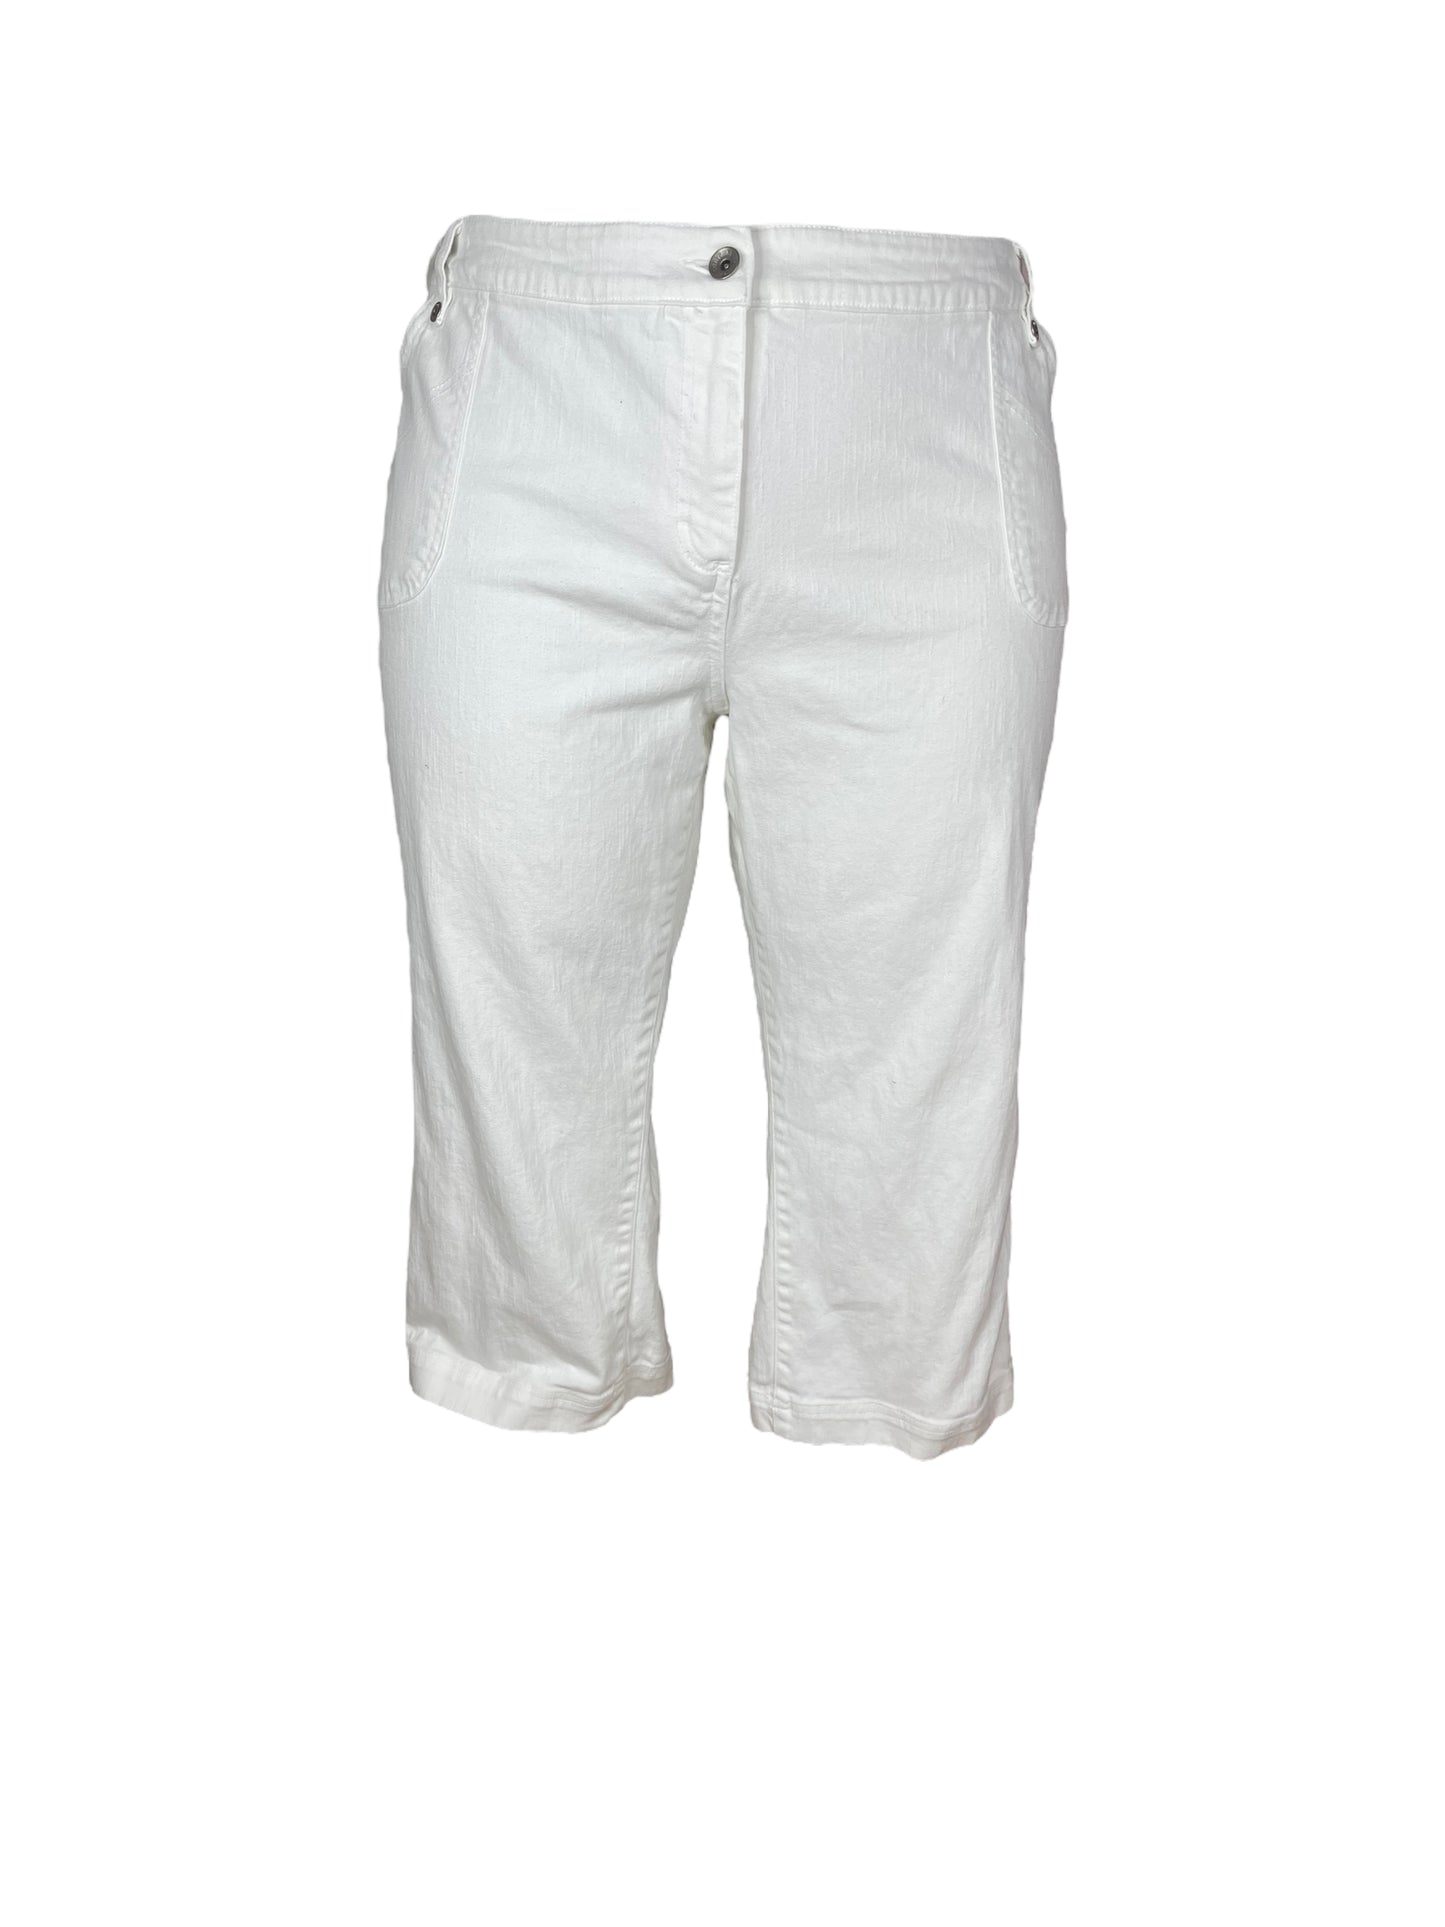 “Contrast” White Capri Pants (22)